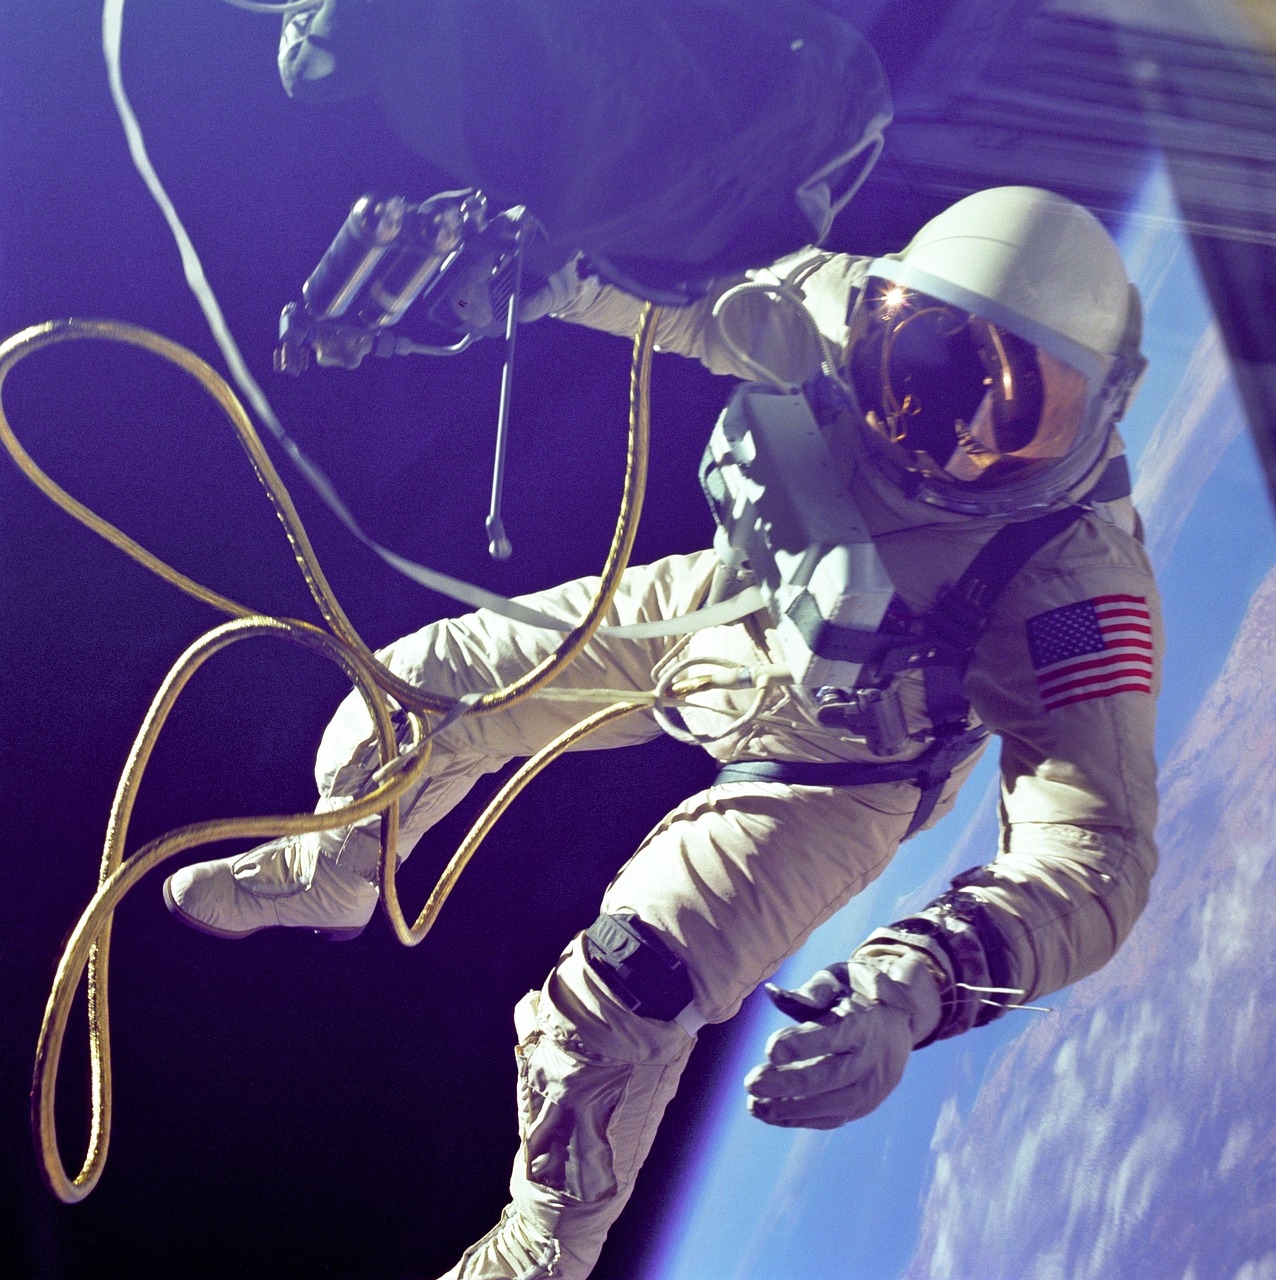 spacewalk eva astronaut free photo